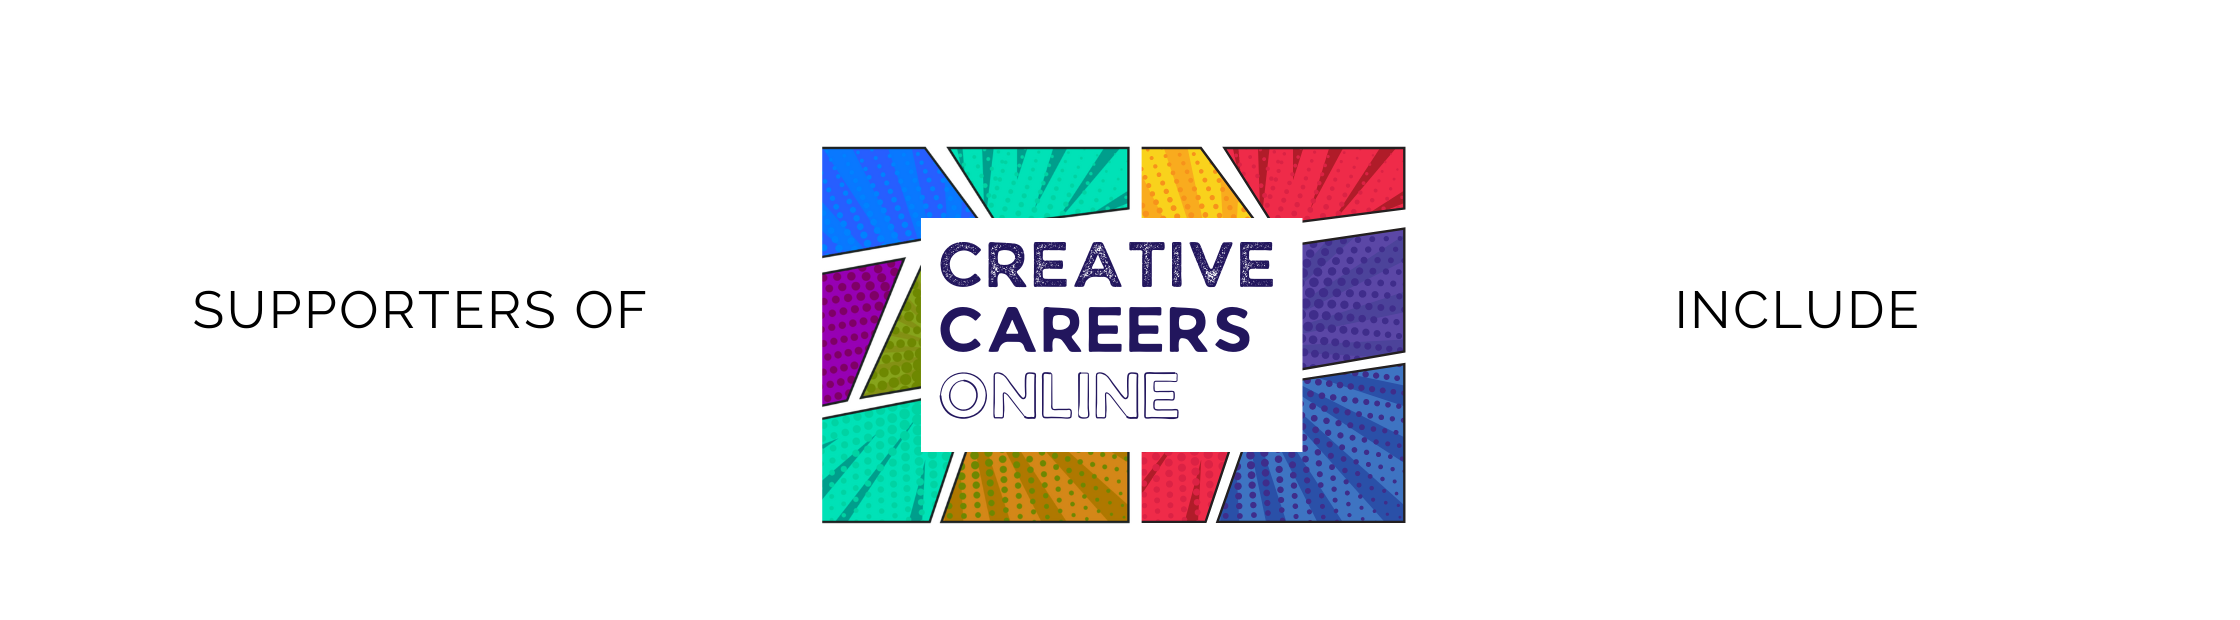 Creative Careers Online Supporters